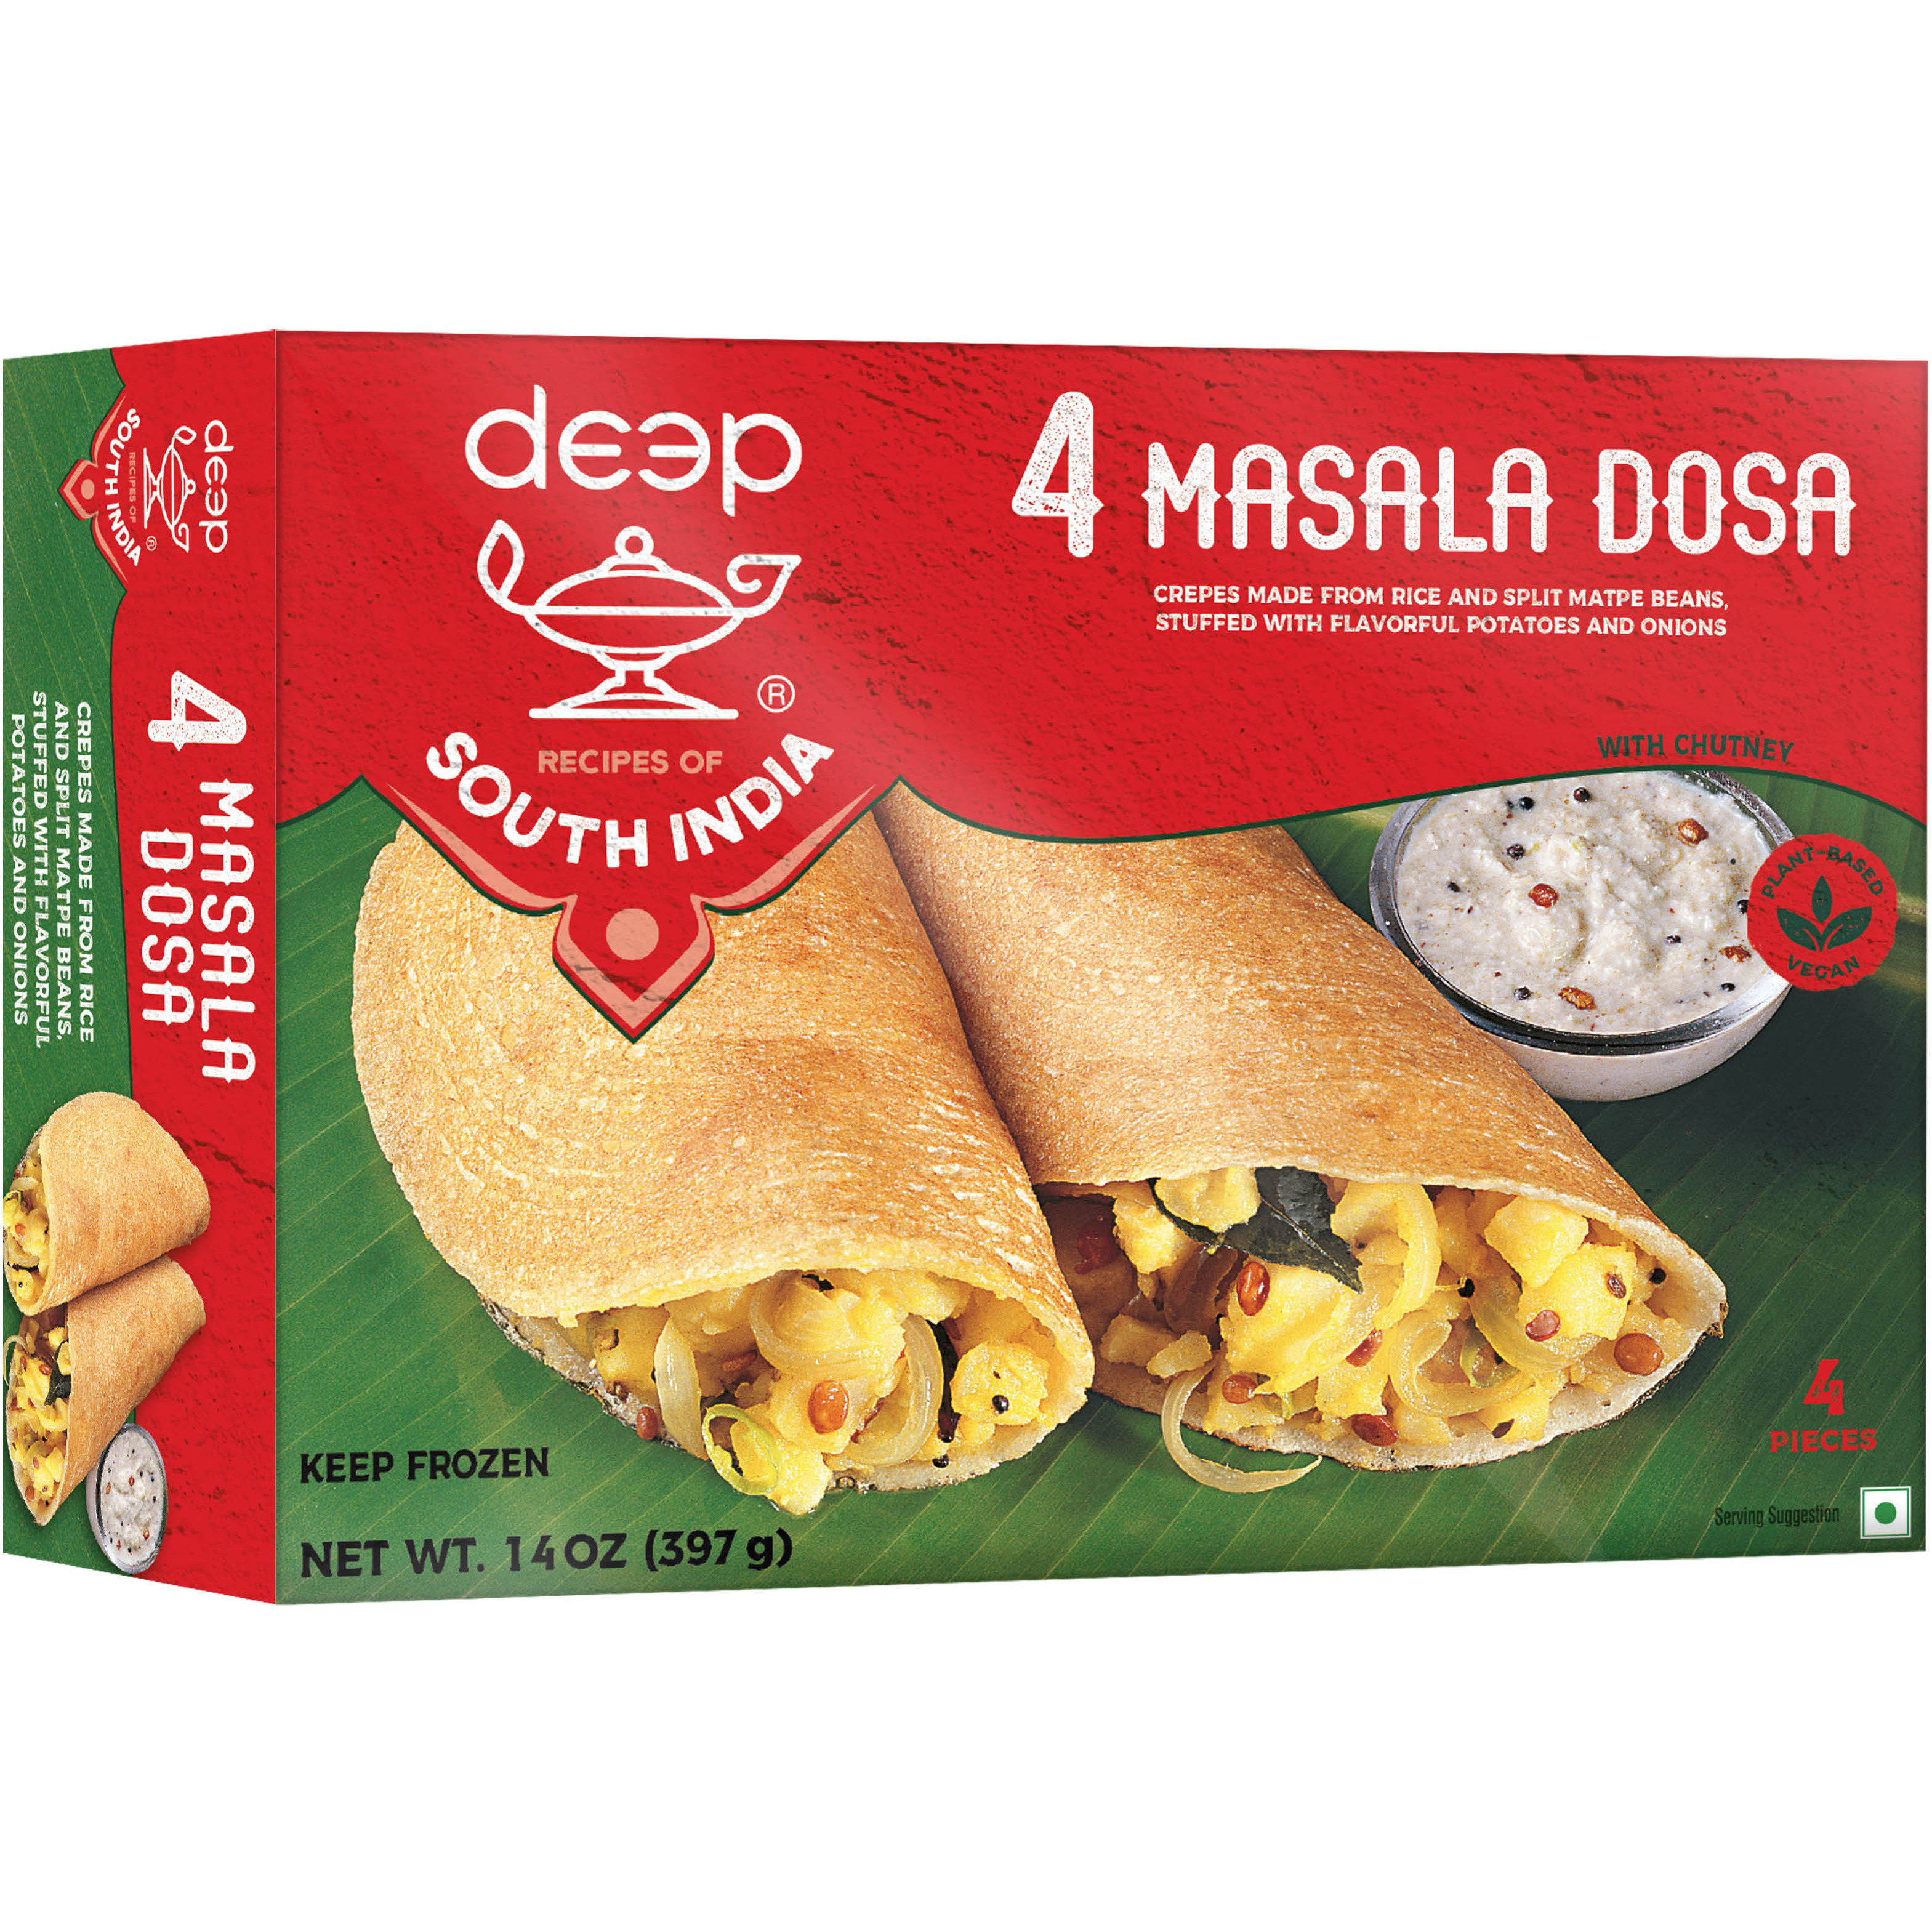 Deep South India Masala Dosa 4 Pack - 14 Oz (397 Gm)